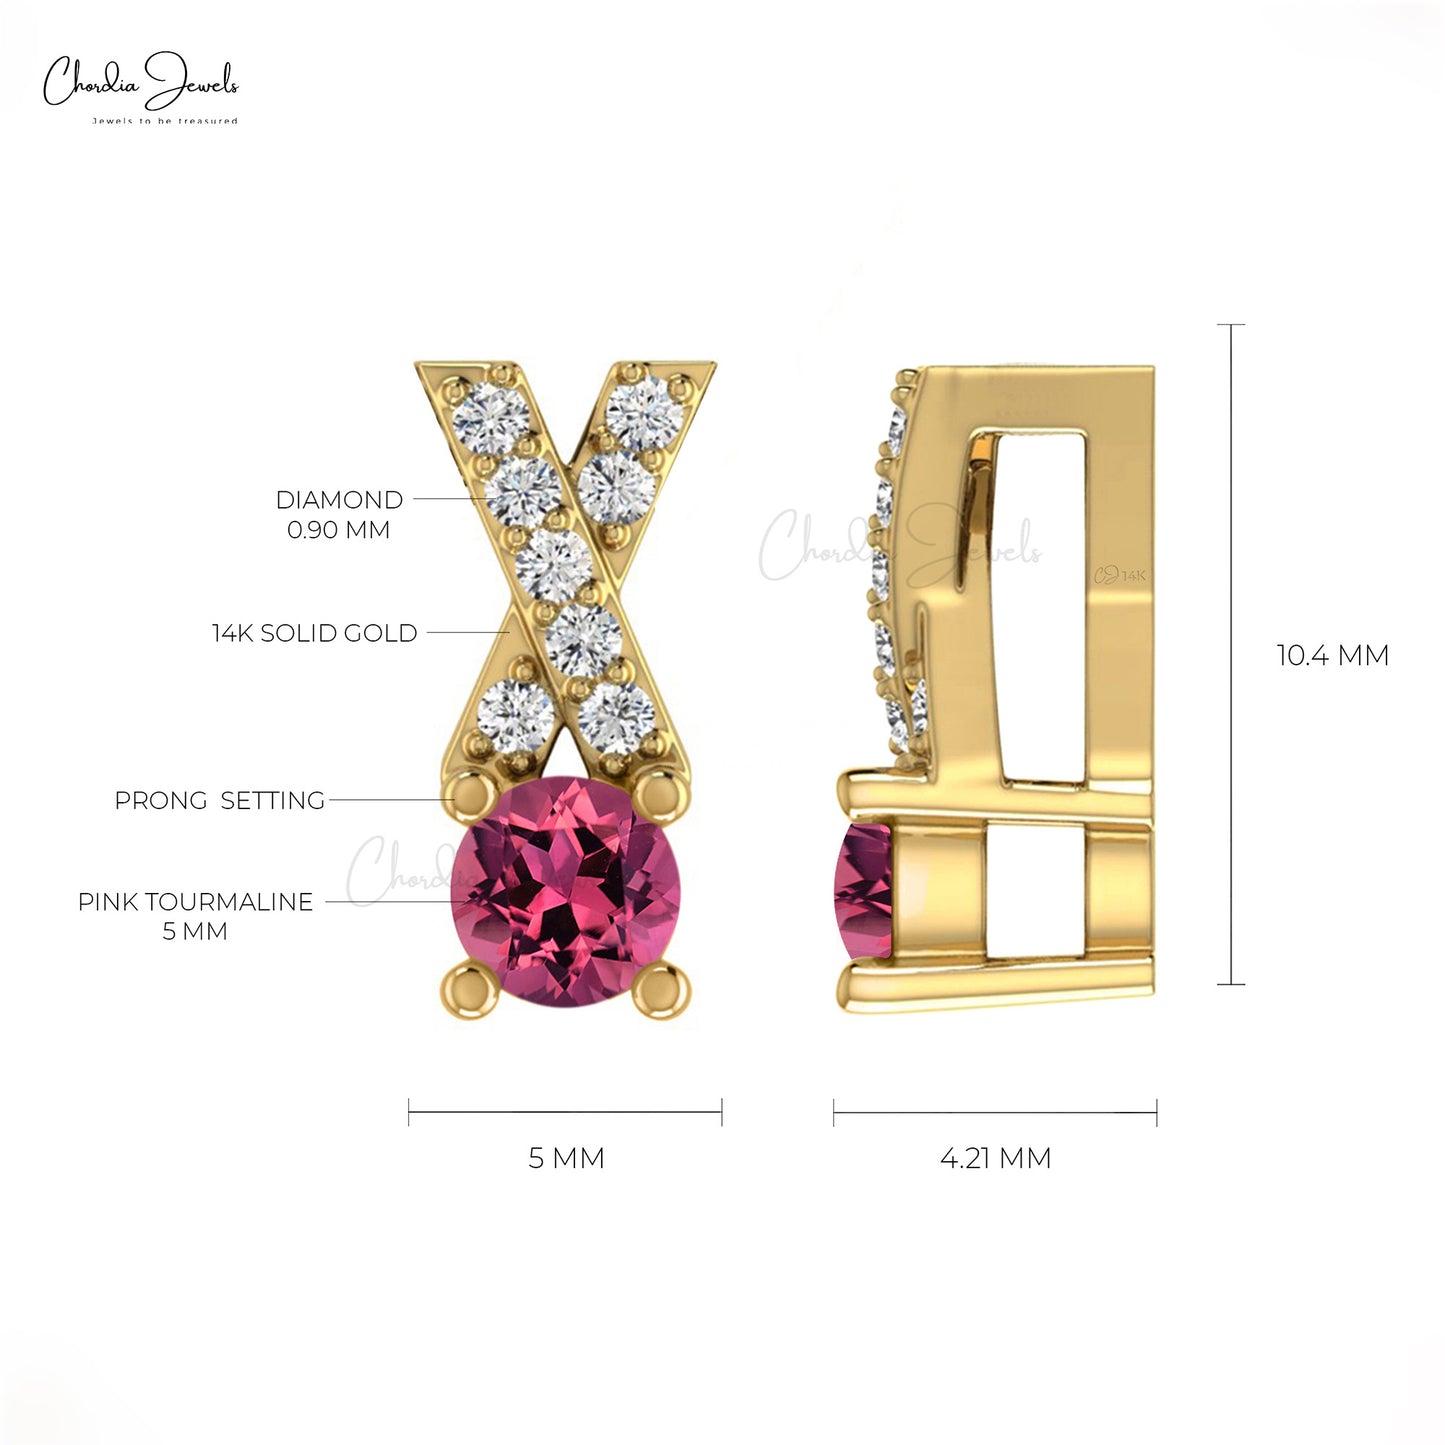 Pink Tourmaline & Diamond Criss Cross Pendant in 14K Gold October Birthstone